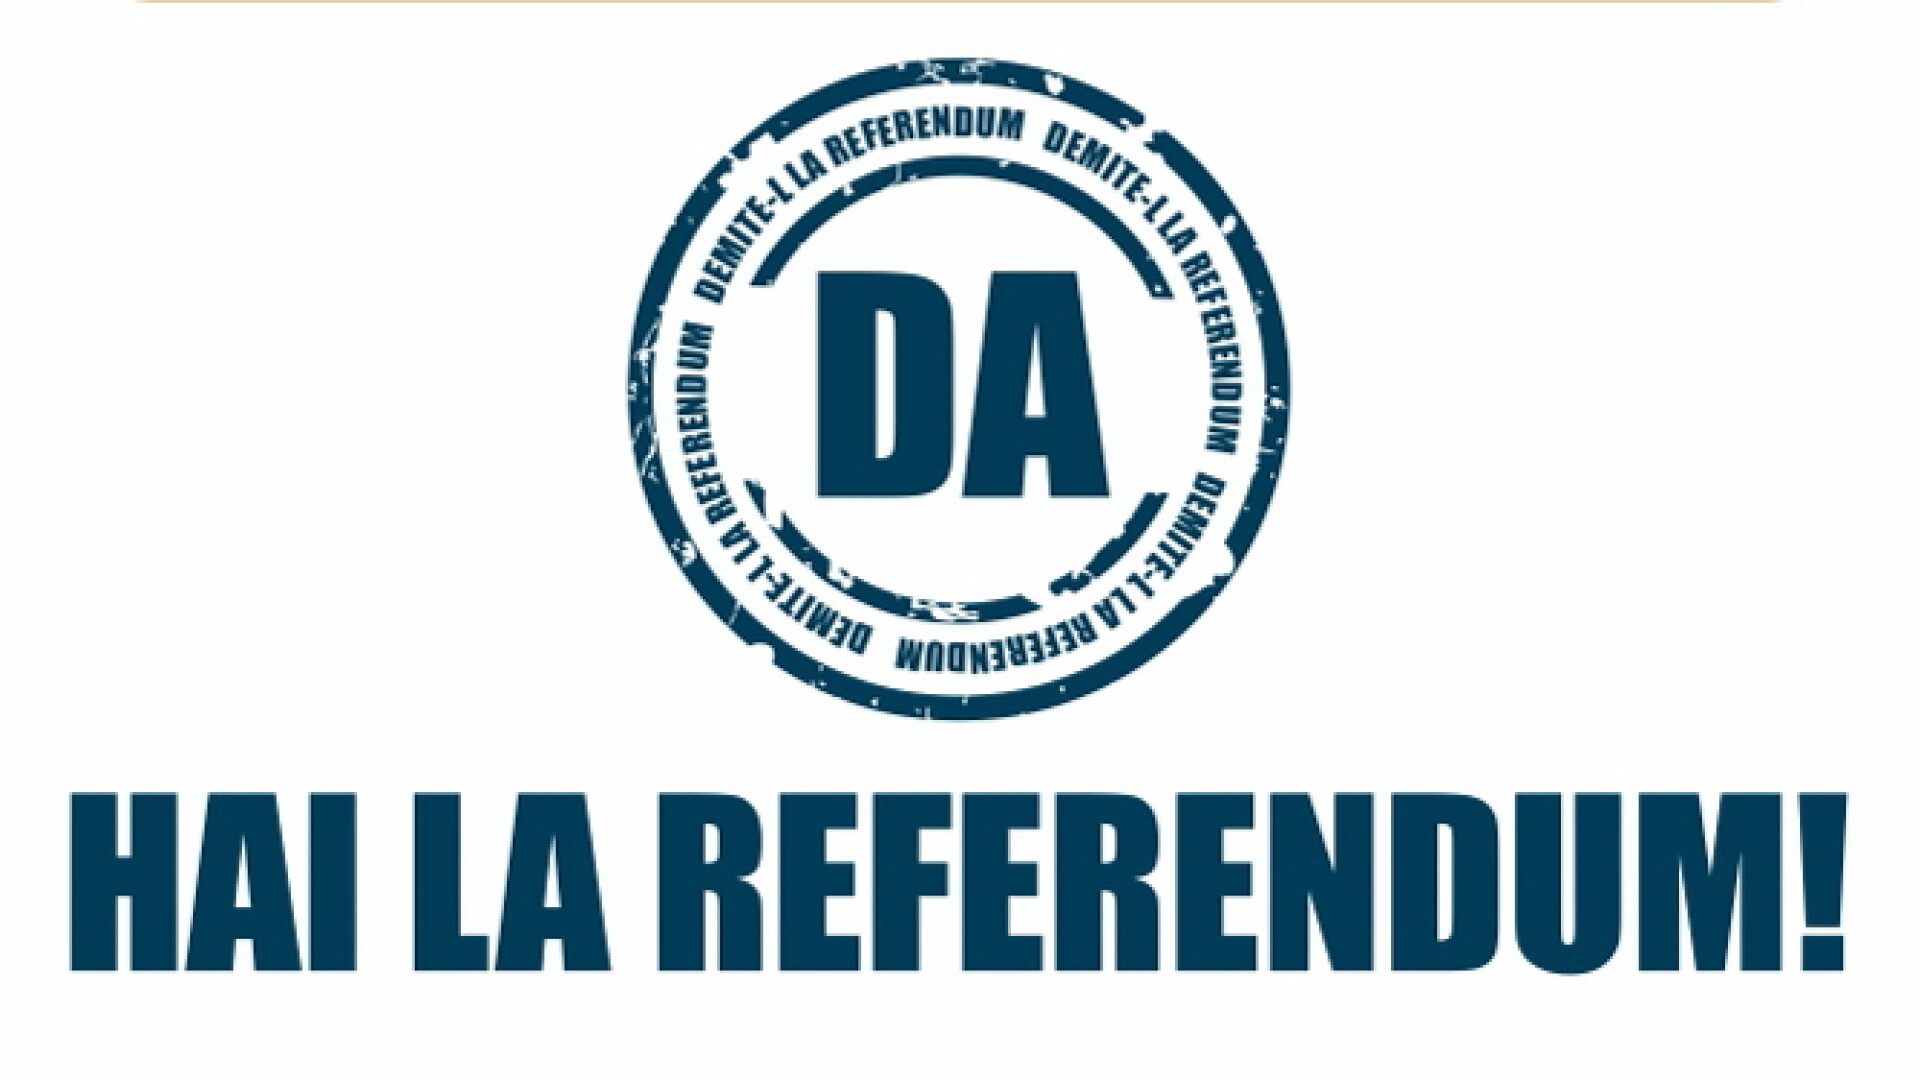 Referendum 2012